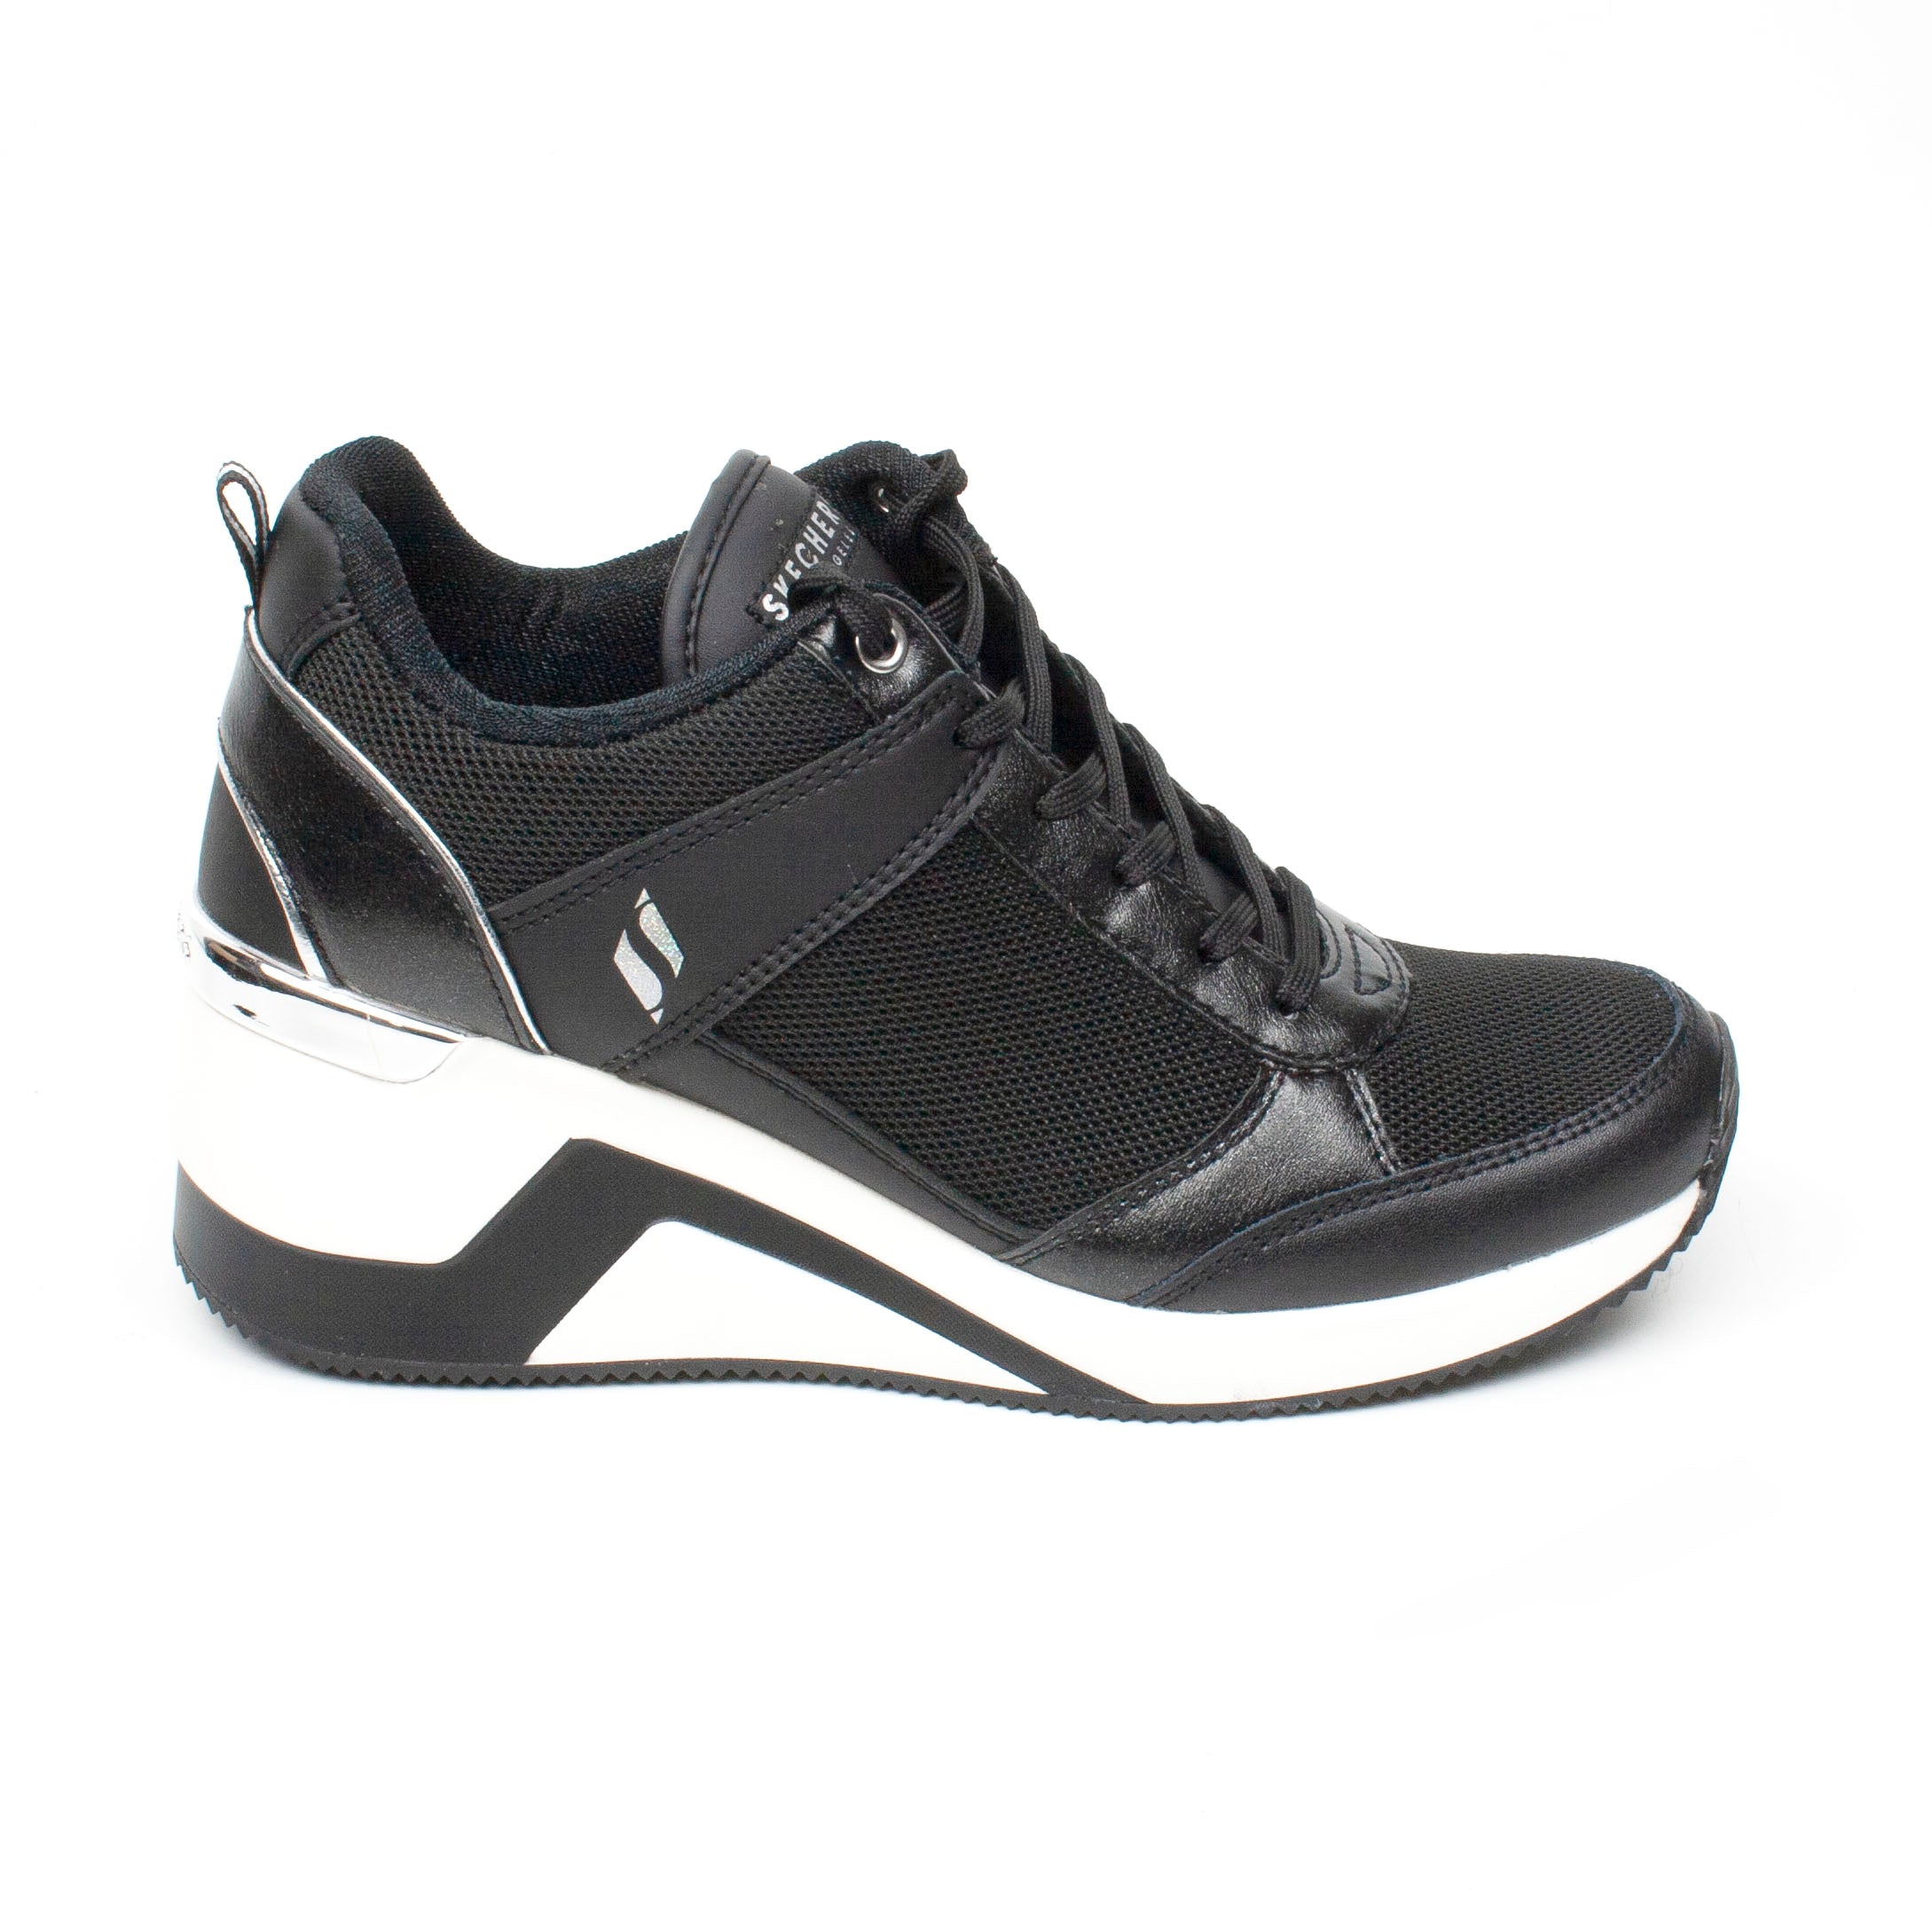 Skechers pantofi dama sport 74391 negru ID1919-NG